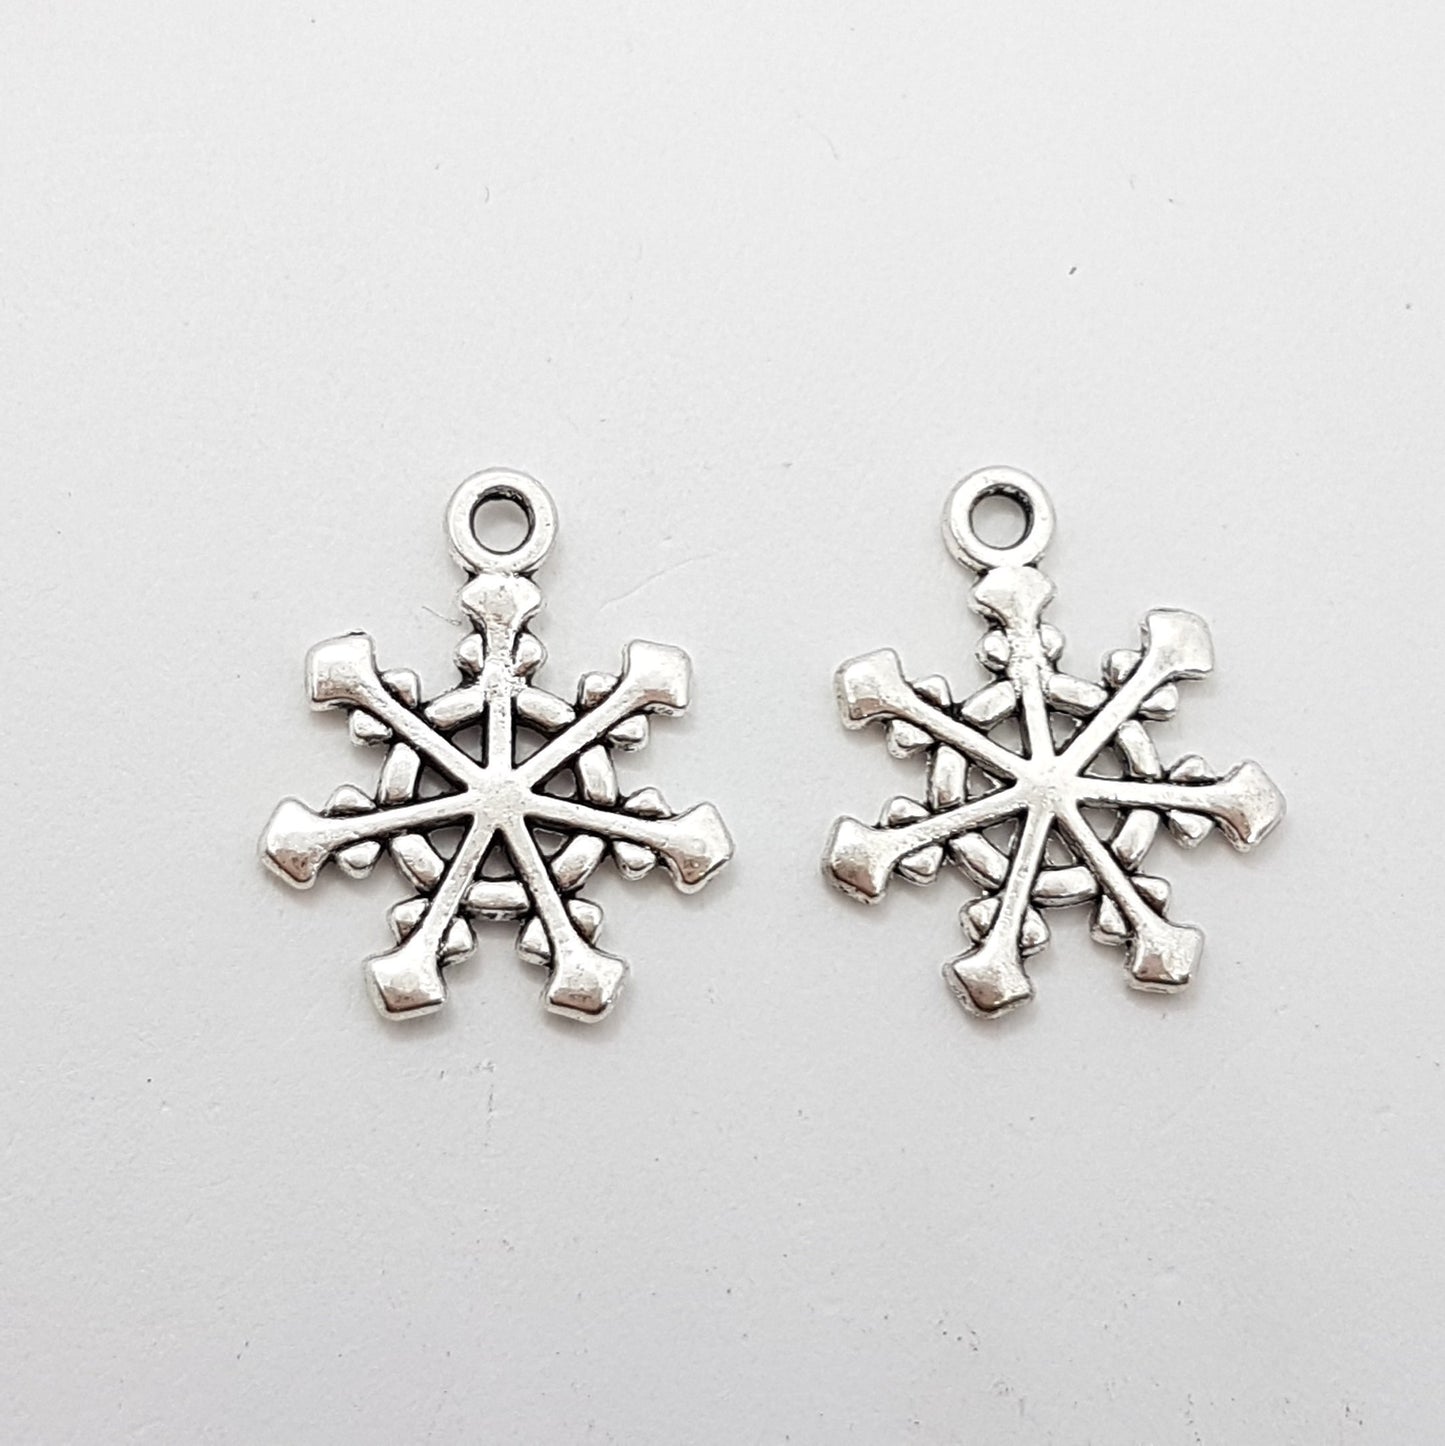 Antique Silver Snowflake Charm